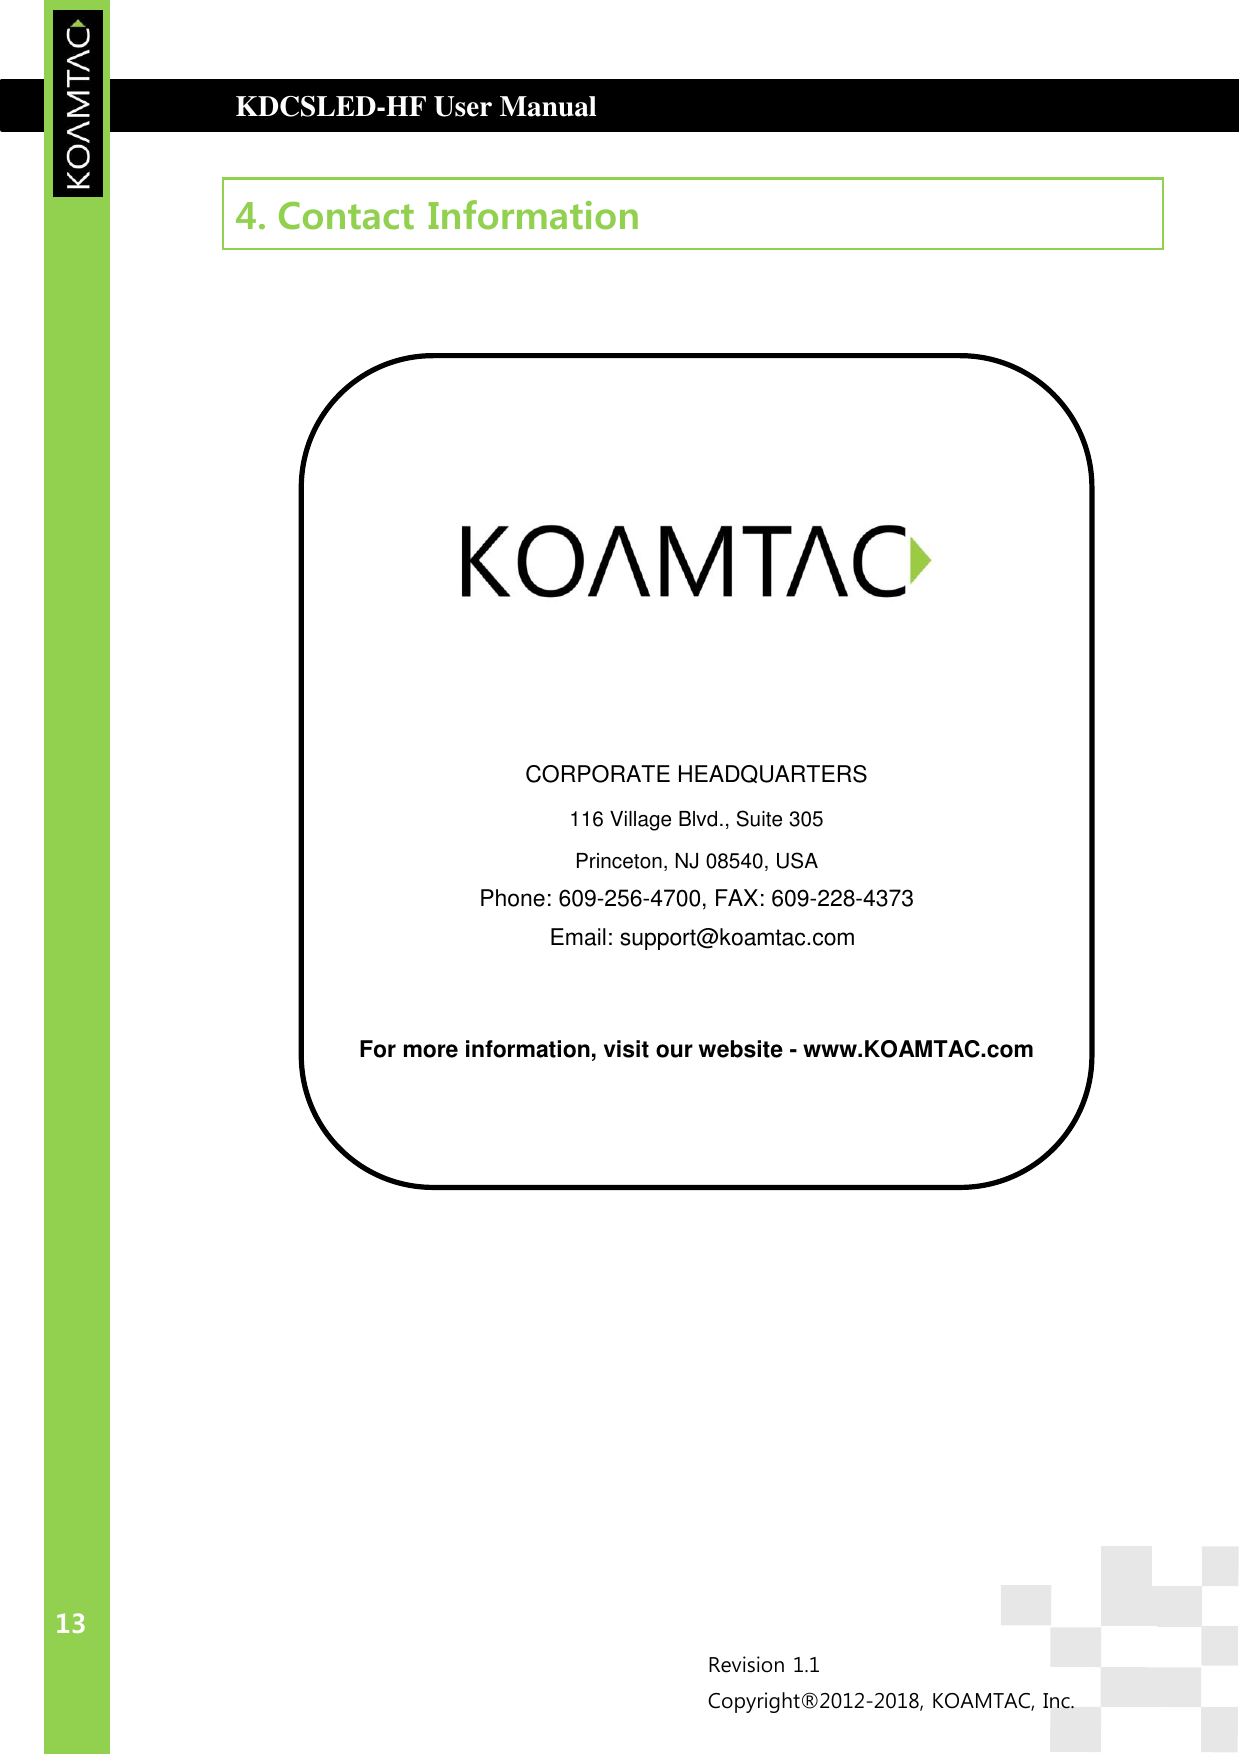  KDCSLED-HF User Manual               13 Revision 1.1 Copyright®2012-2018, KOAMTAC, Inc.      CORPORATE HEADQUARTERS 116 Village Blvd., Suite 305 Princeton, NJ 08540, USA Phone: 609-256-4700, FAX: 609-228-4373   Email: support@koamtac.com   For more information, visit our website - www.KOAMTAC.com    4. Contact Information                   